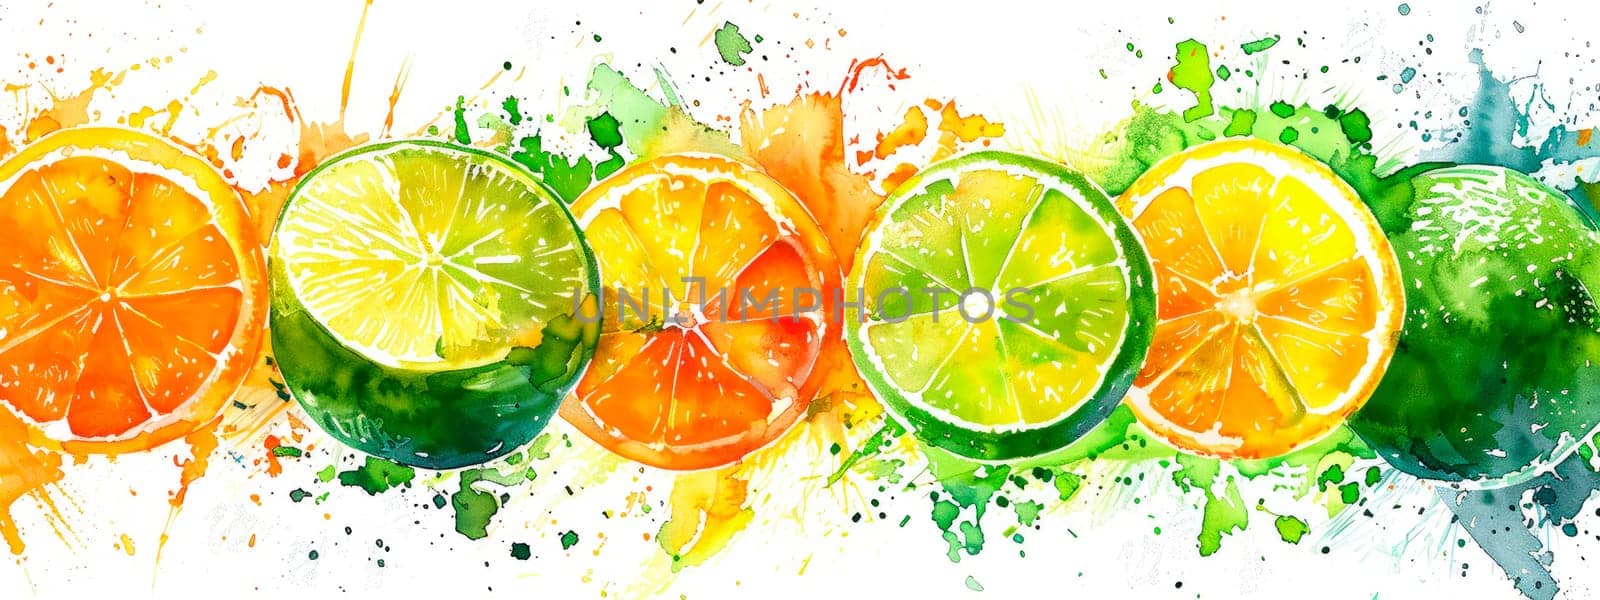 drawing watercolor citrus fruits. selective focus. food.